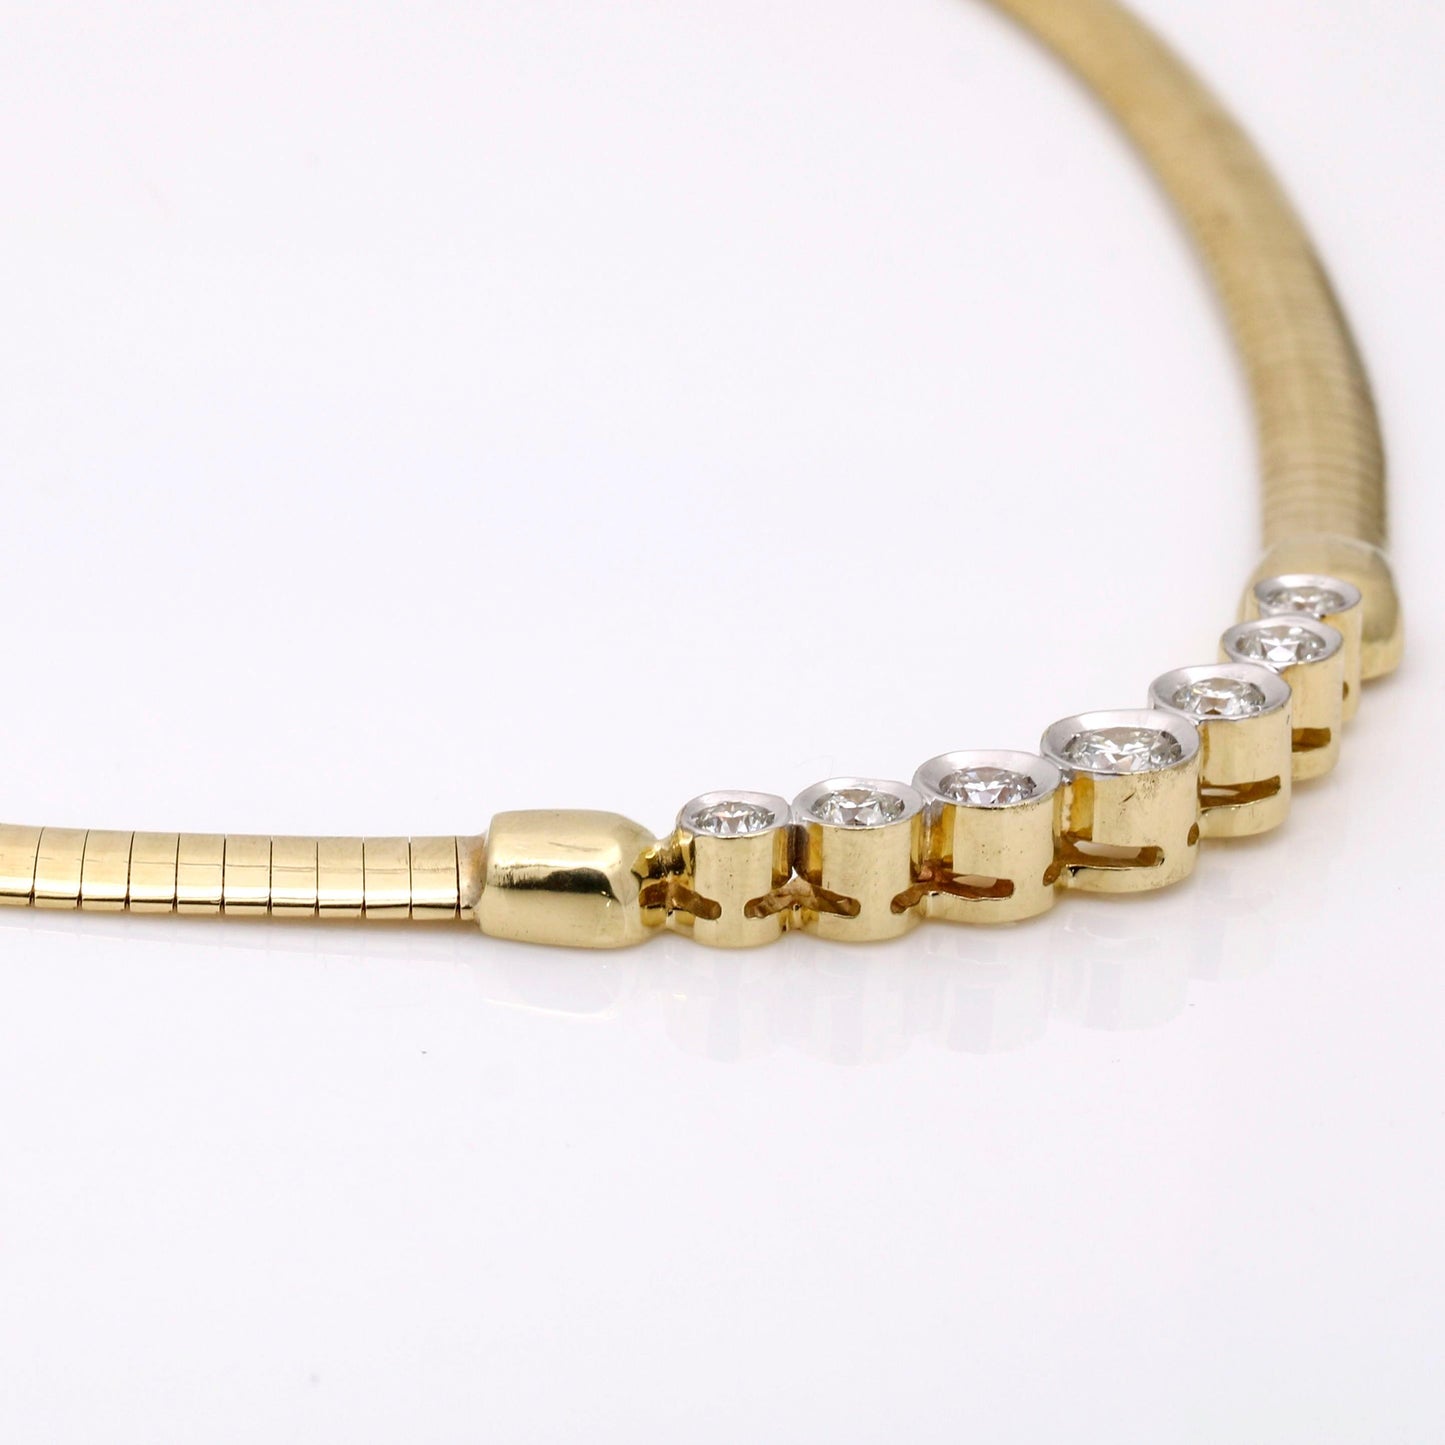 Women's Graduated Diamond Omega Necklace 14k Yellow Gold - 31 Jewels Inc.